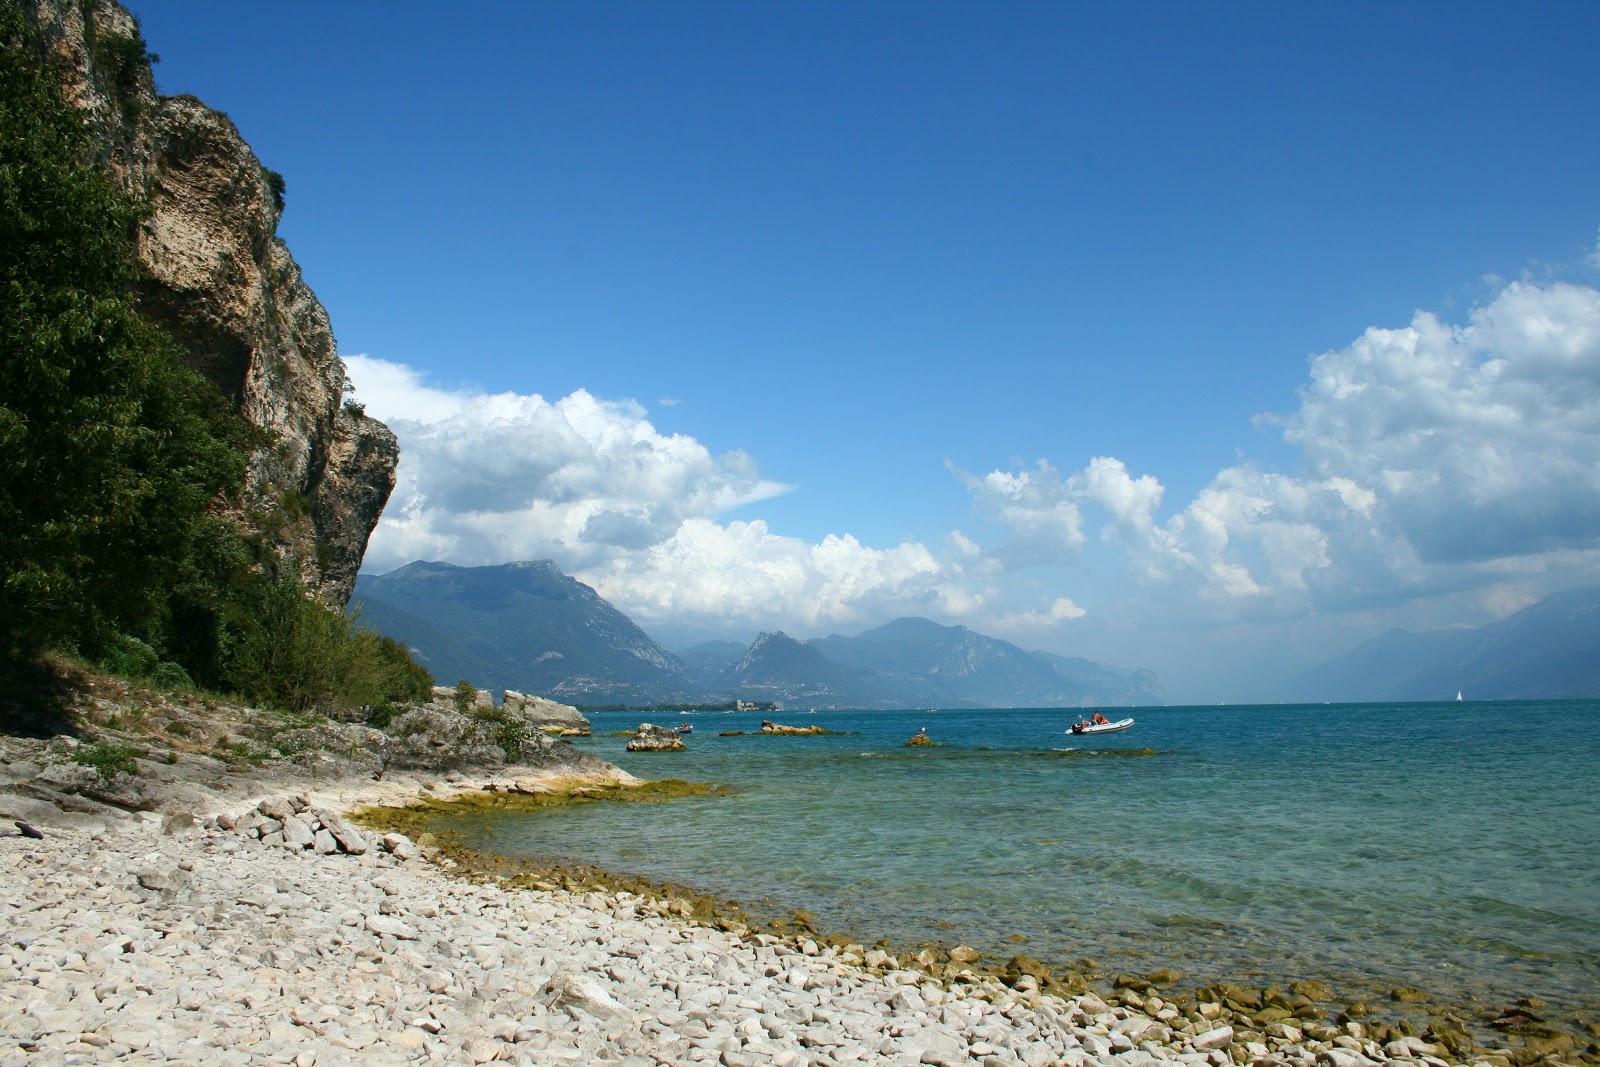 Valokuva Spiaggia della Roccaista. pinnalla kivet:n kanssa